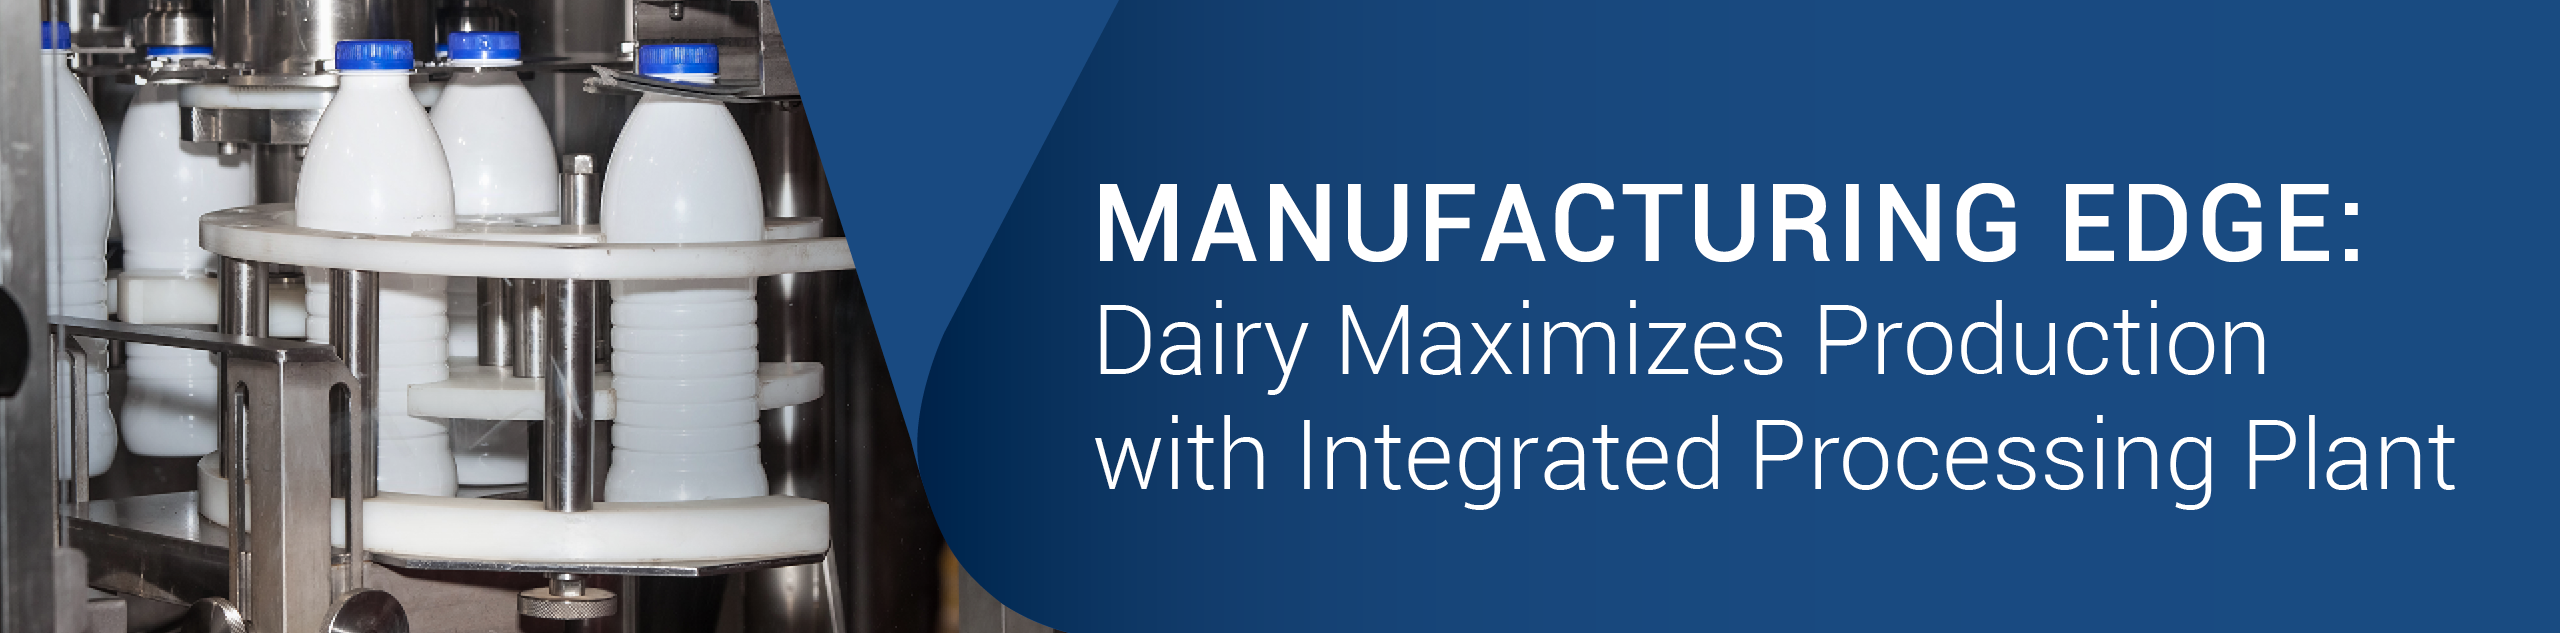 Dairy Maximizes Production